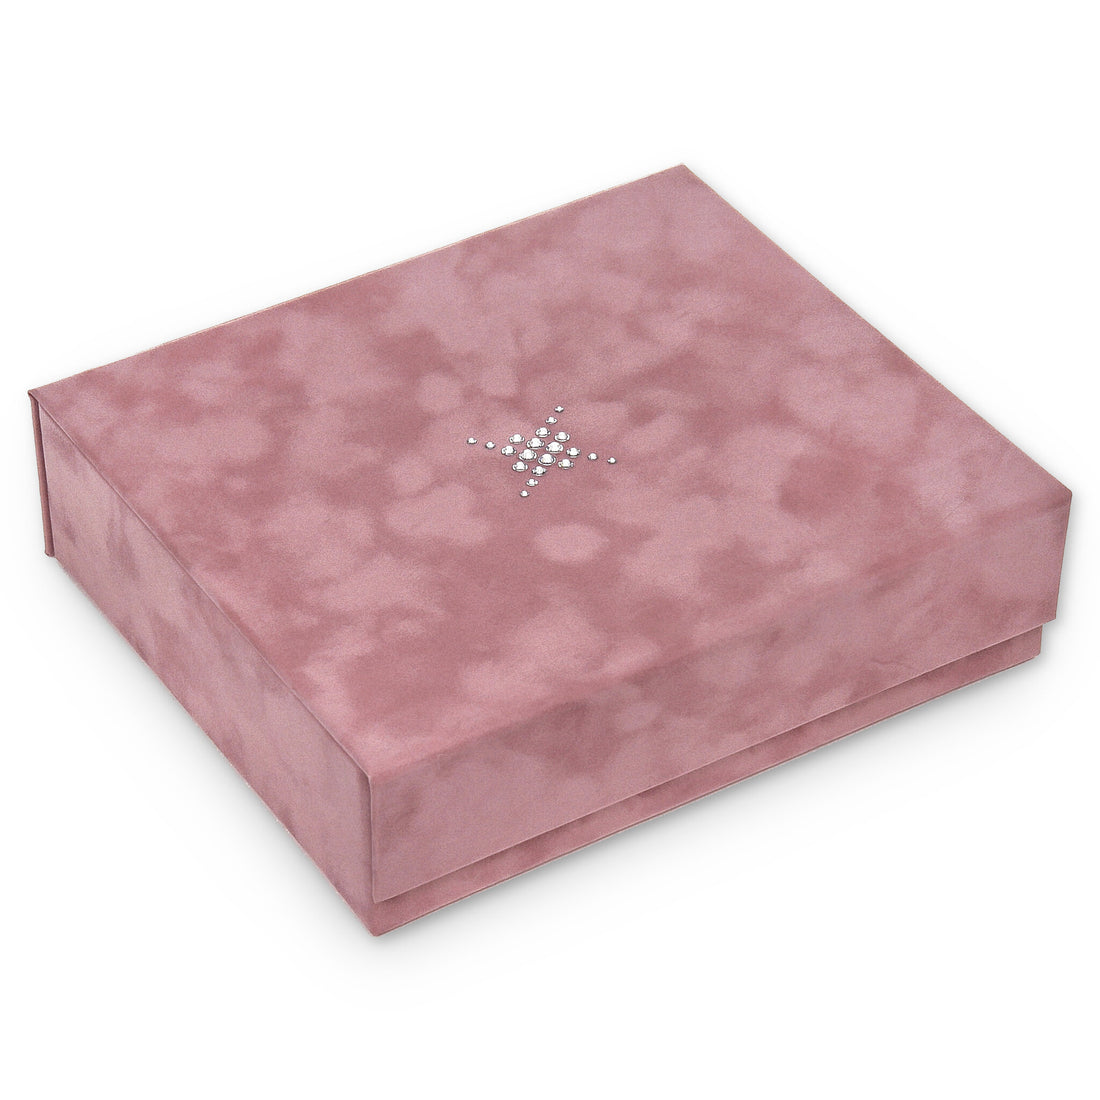 Schmuckbox Nora crystalo / alt rosé